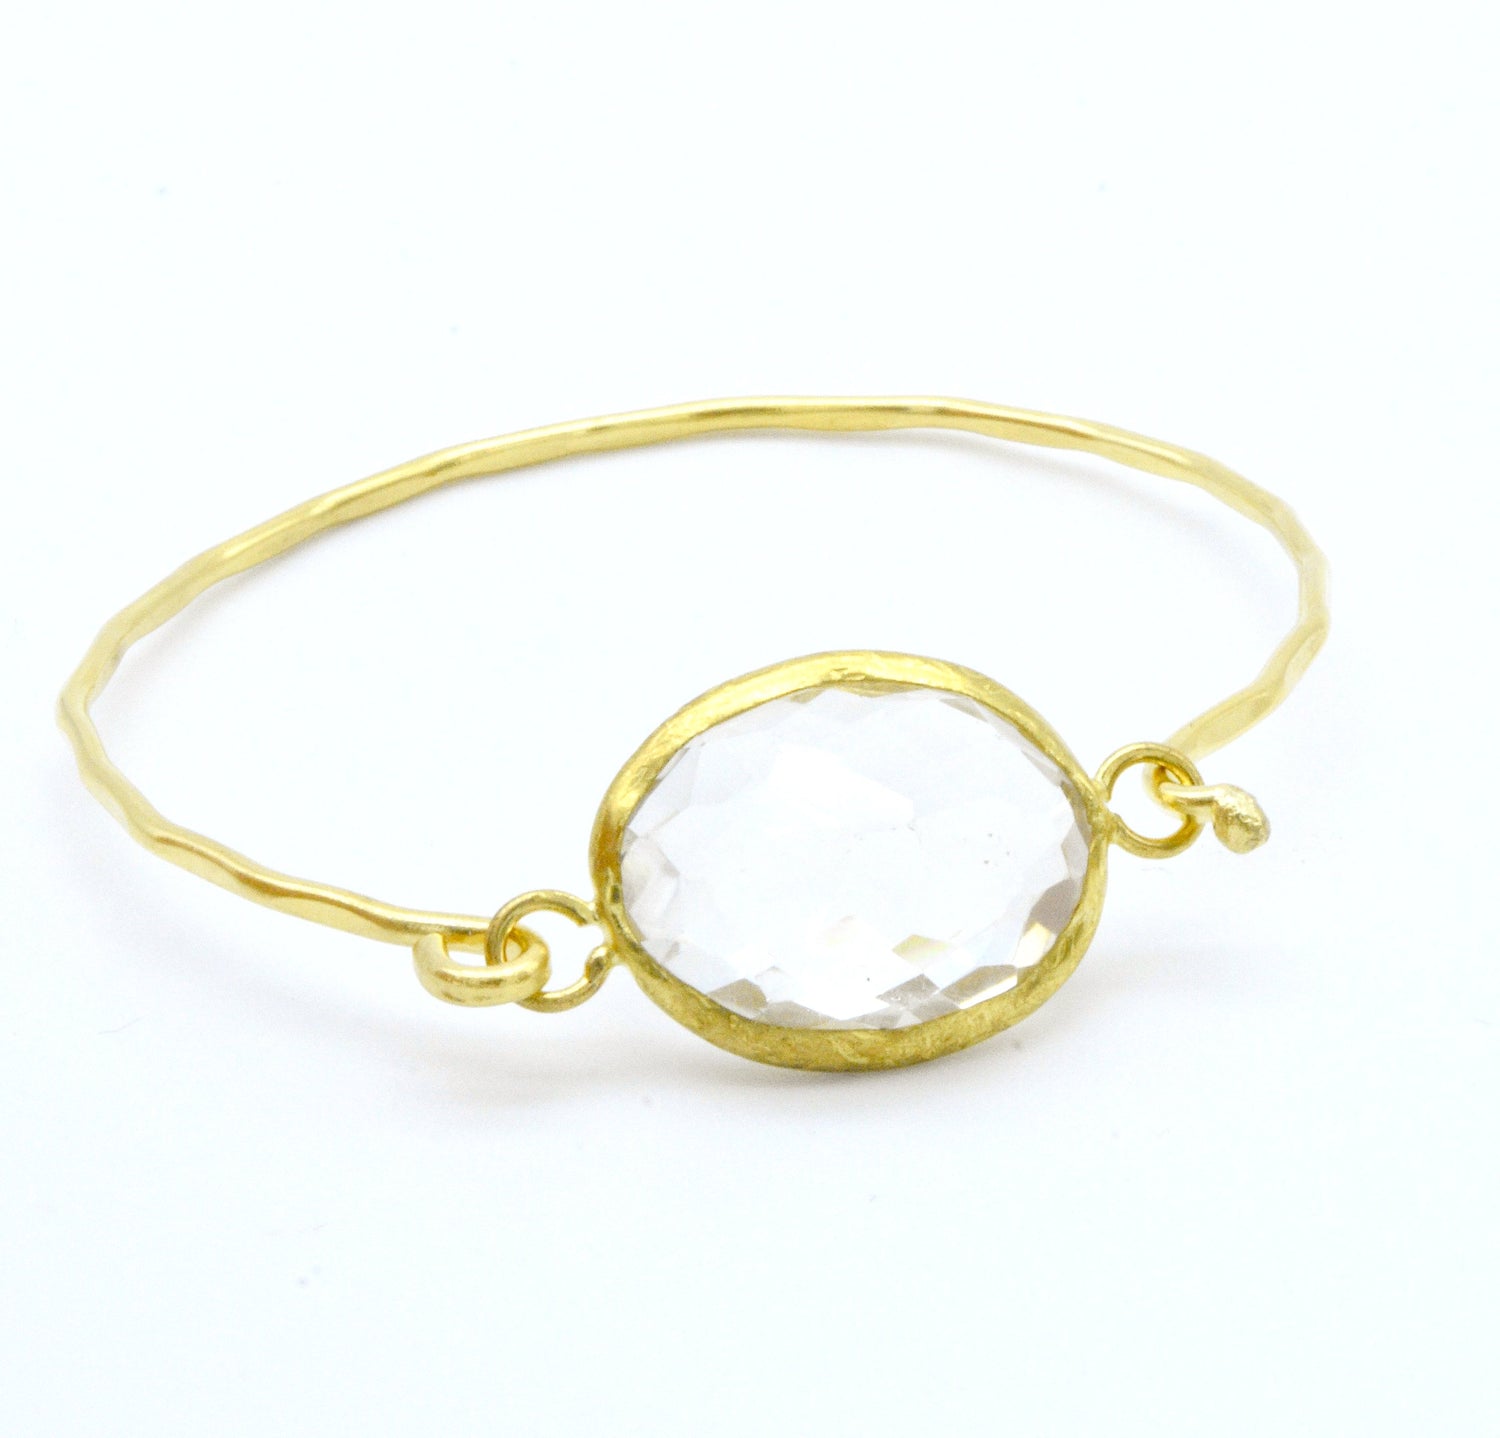 Aylas Crystal cuff/ bracelet - 21ct Gold plated semi precious gemstone - Handmade in Ottoman Style by Artisan